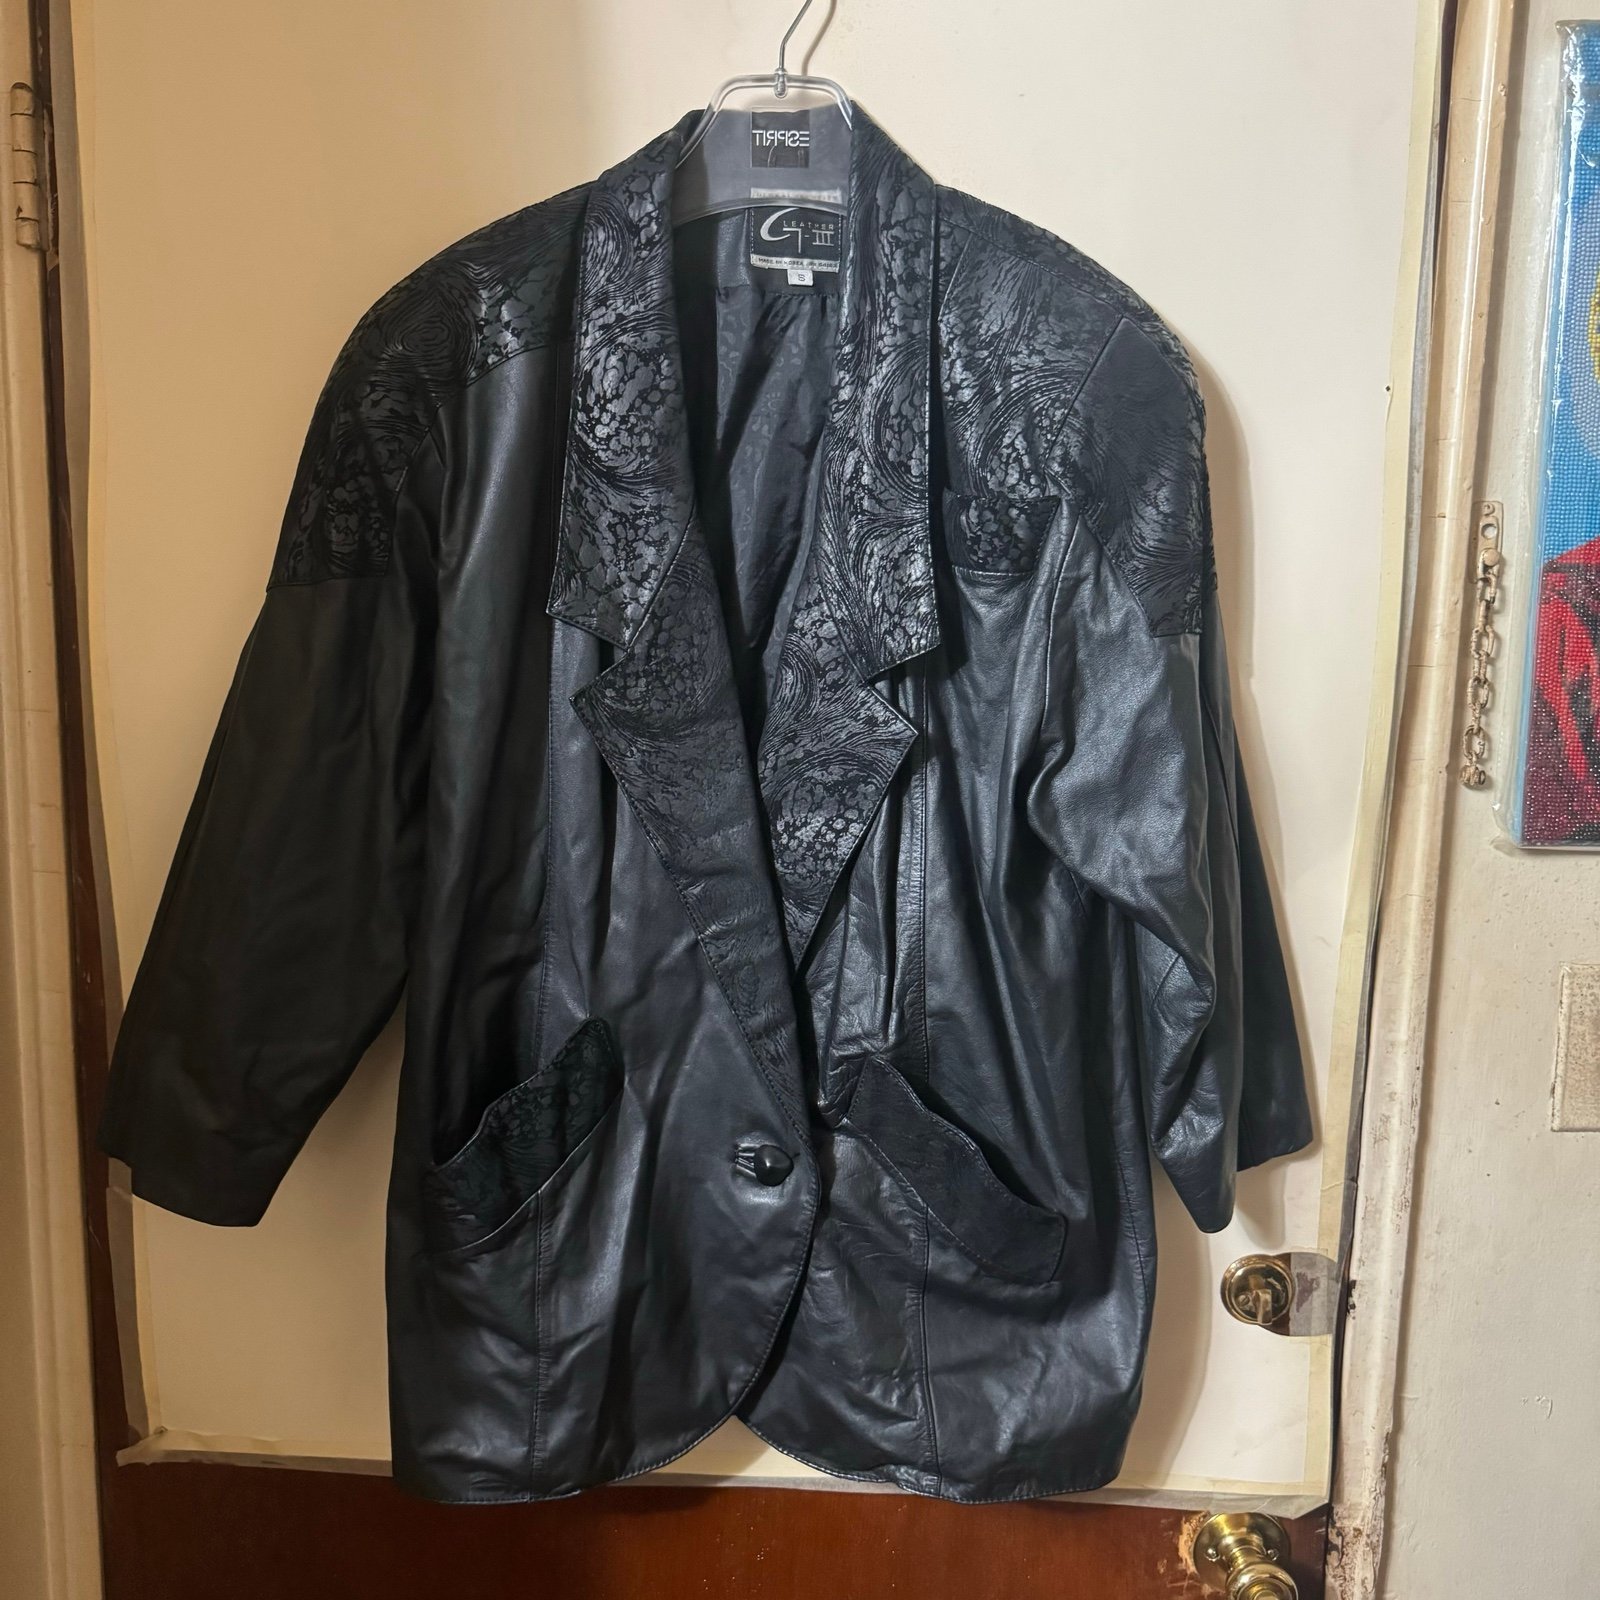 Vintage Global Identity G-III Embossed Leather Jacket, Womens S Black 9FBkz8hBu